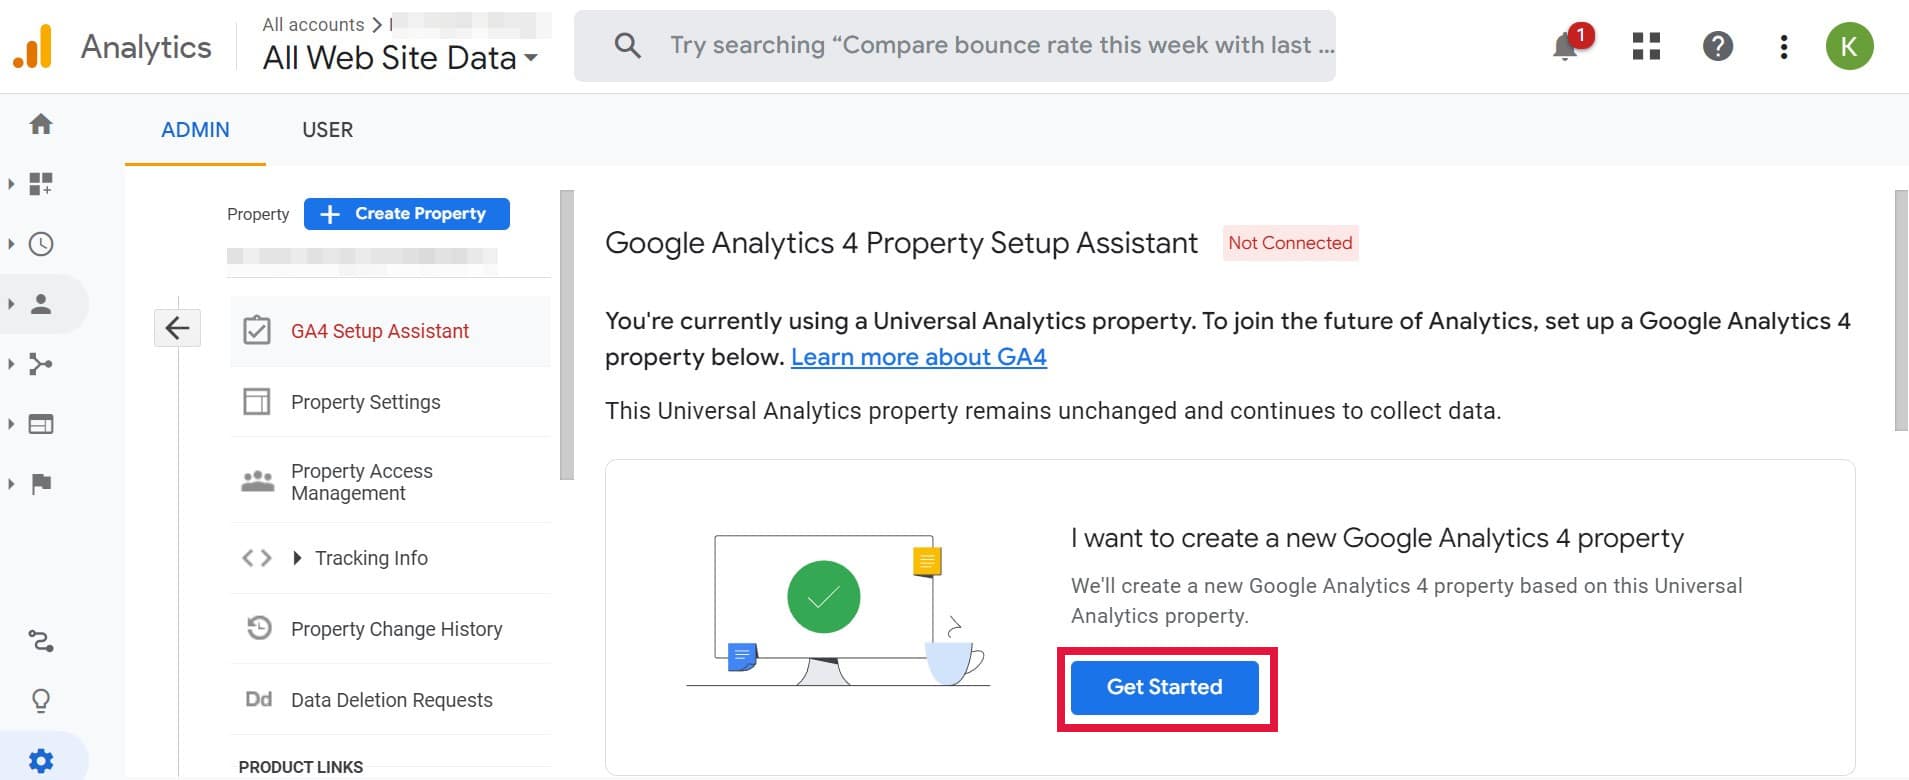 Create a new Google Analytics 4 property